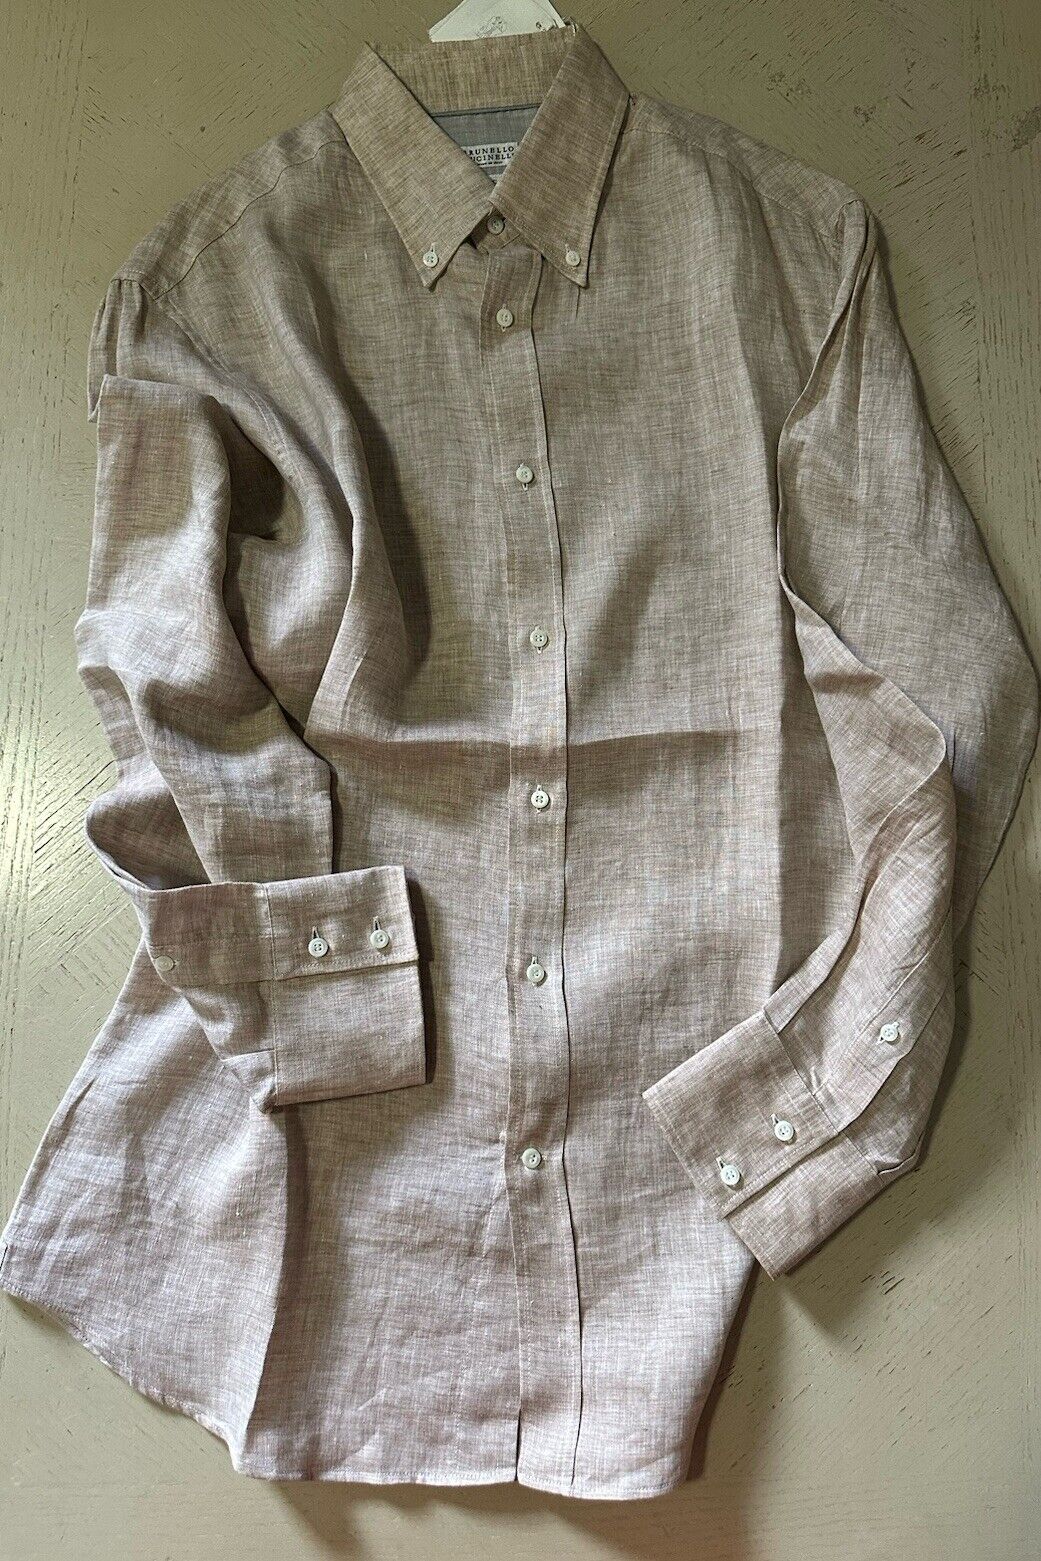 Brunello Cucinelli Men’s Button Down Linen Shirt LT Beige New $695